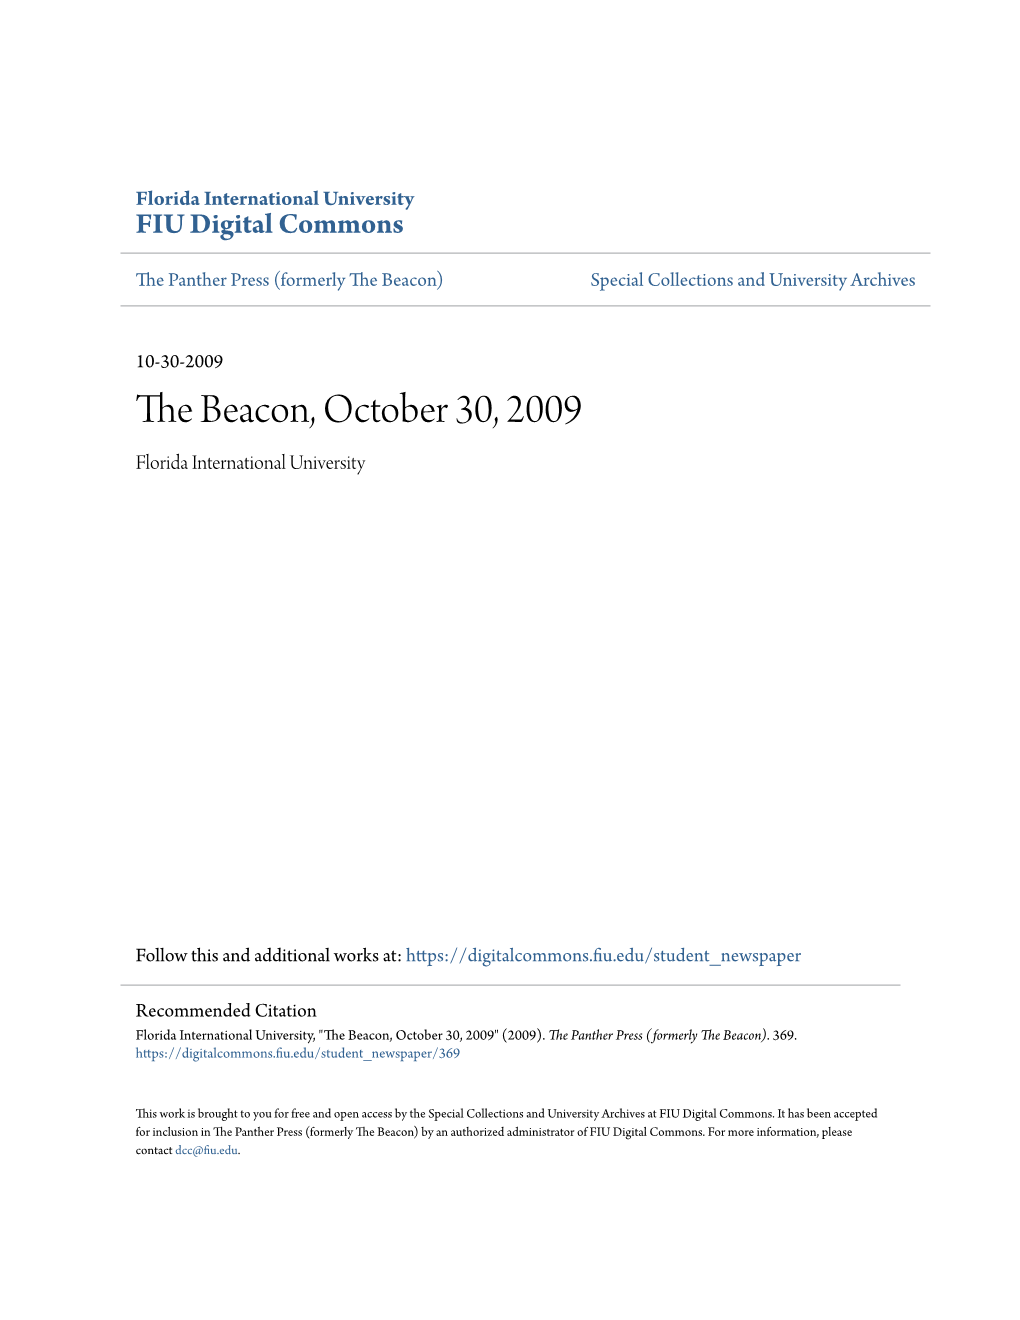 The Beacon, October 30, 2009 Florida International University